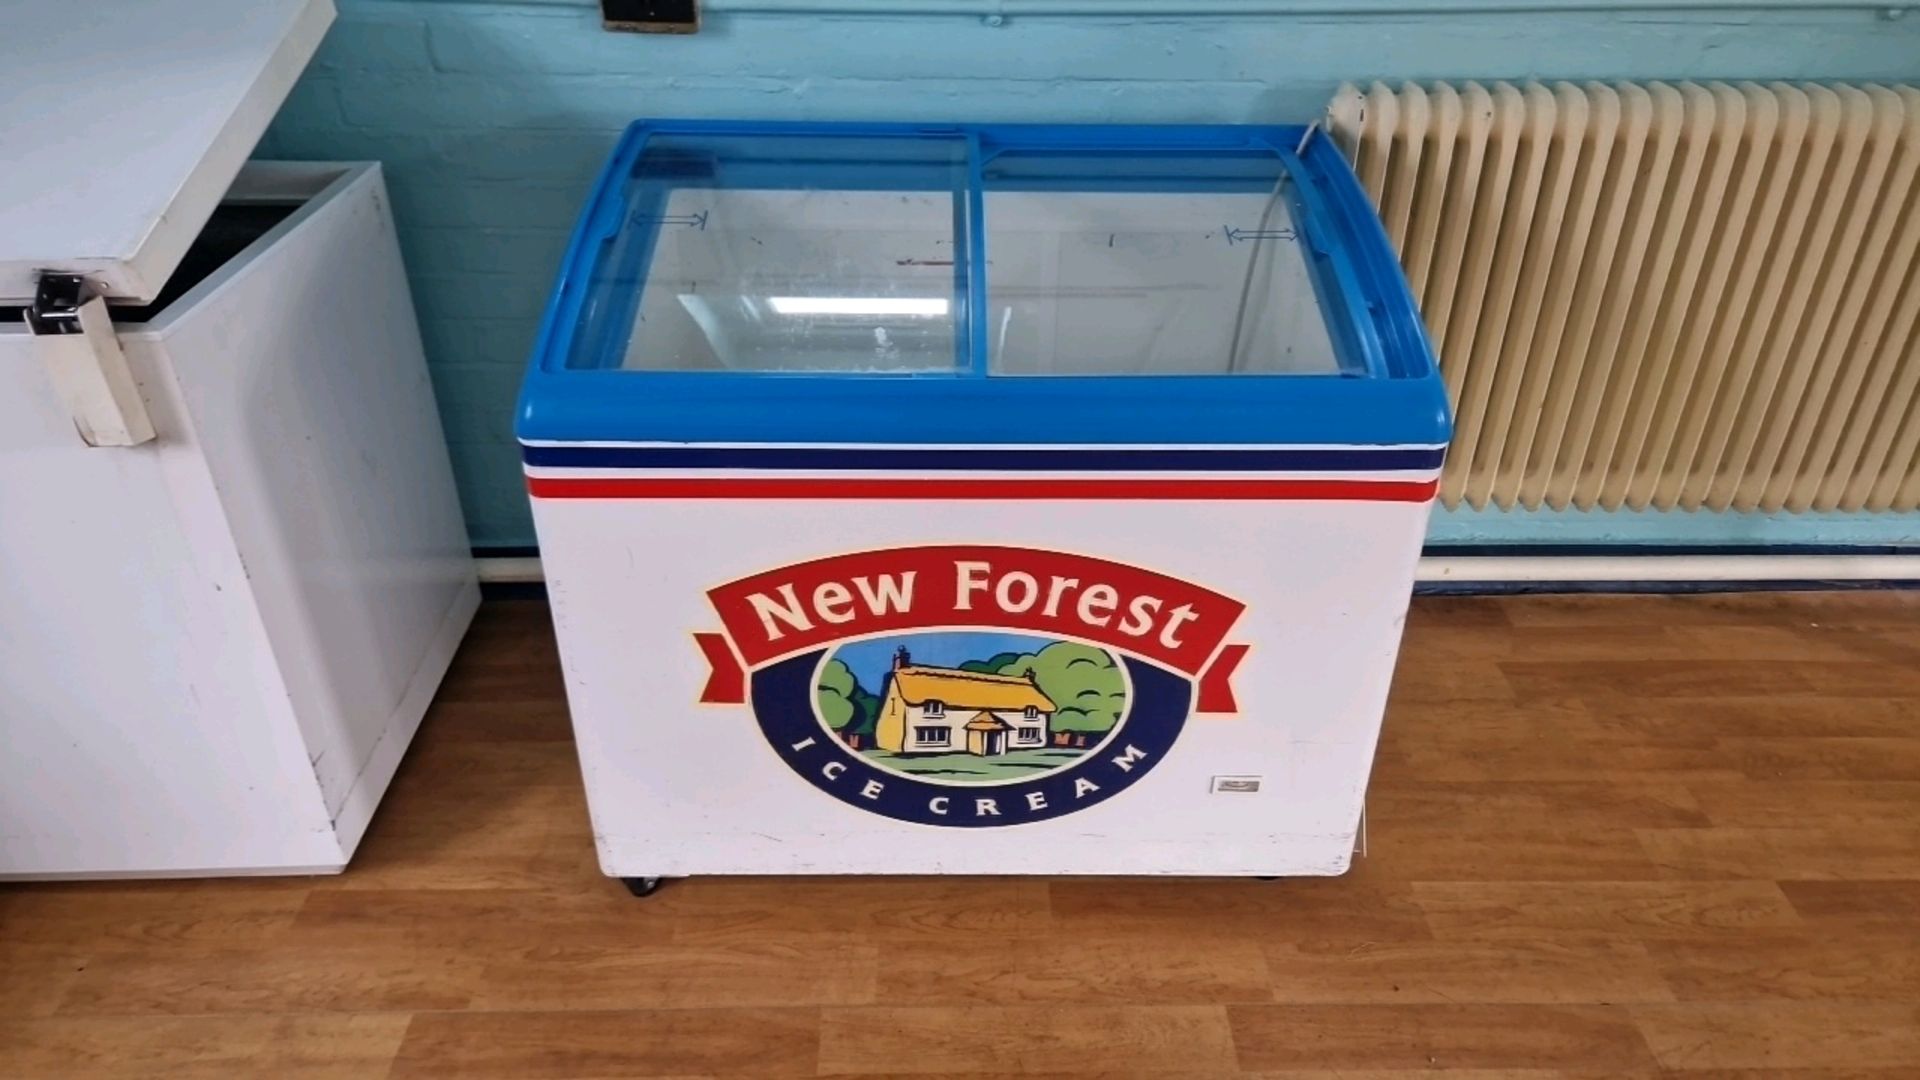 New Forest Ice Cream Freezer - Image 2 of 4